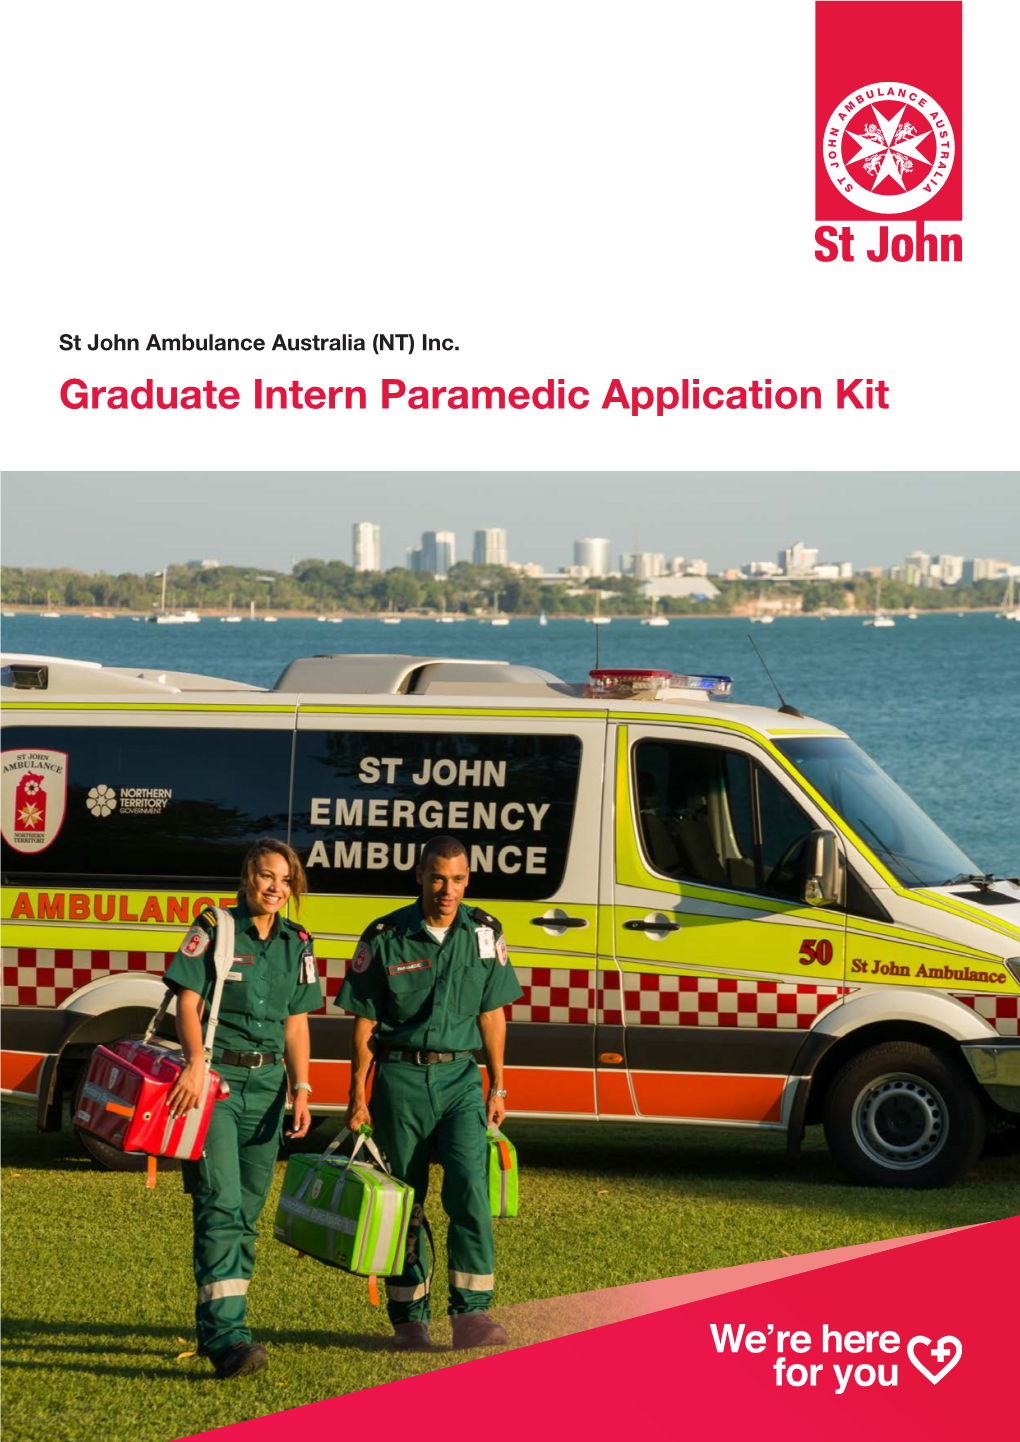 Graduate Intern Paramedic Application Kit 2 St John Ambulance Australia (NT) Inc